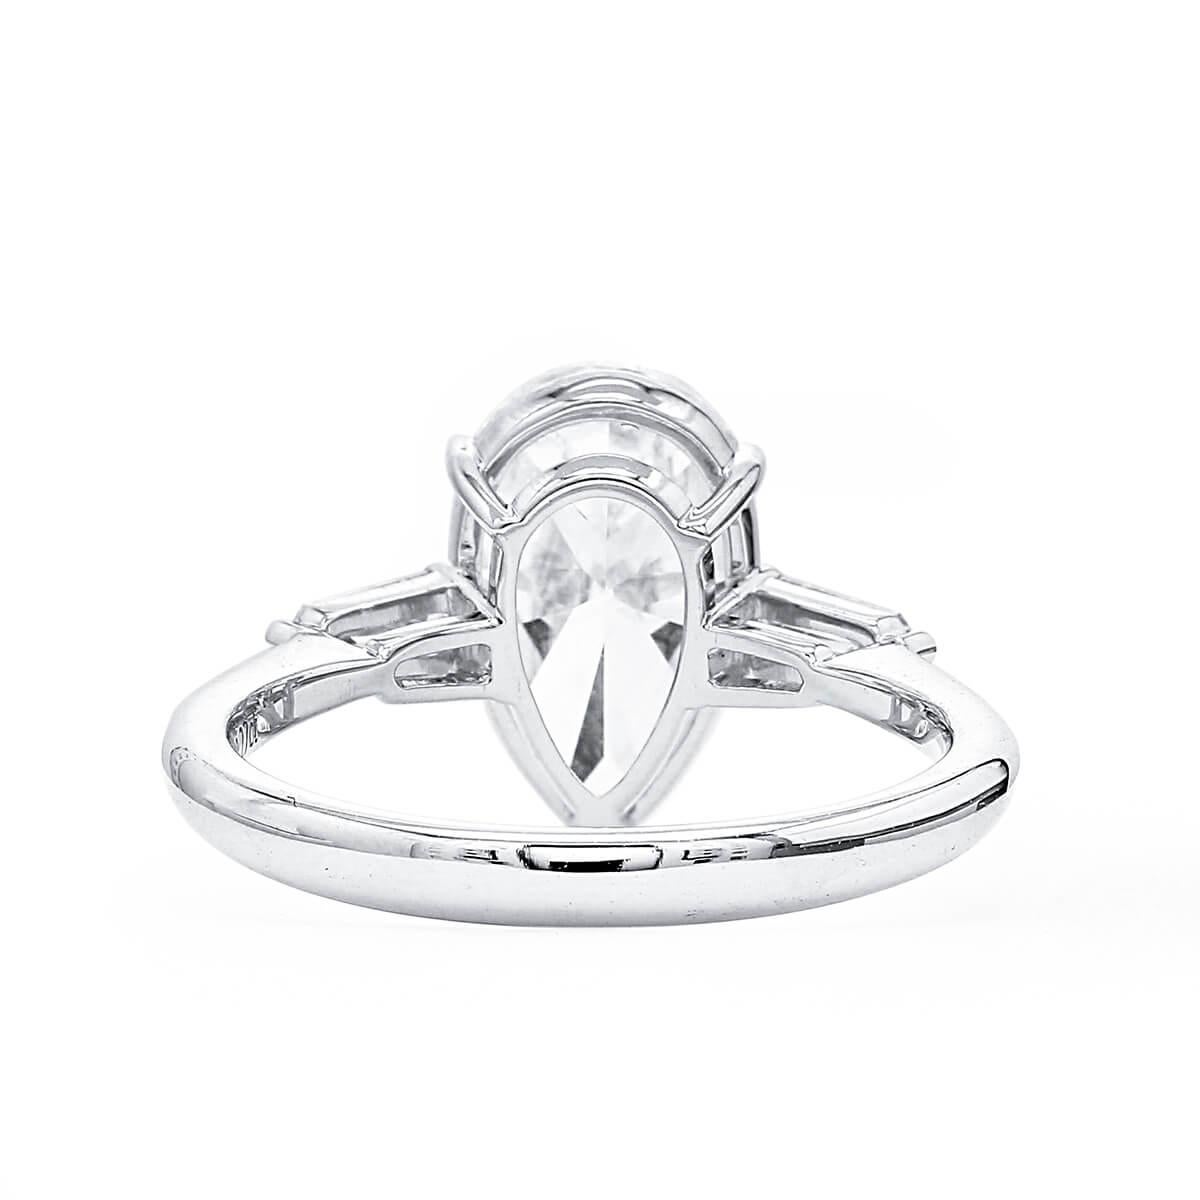 Pear Cut GIA Certified 3.01 Carat Natural White Diamond Engagement Wedding Ring